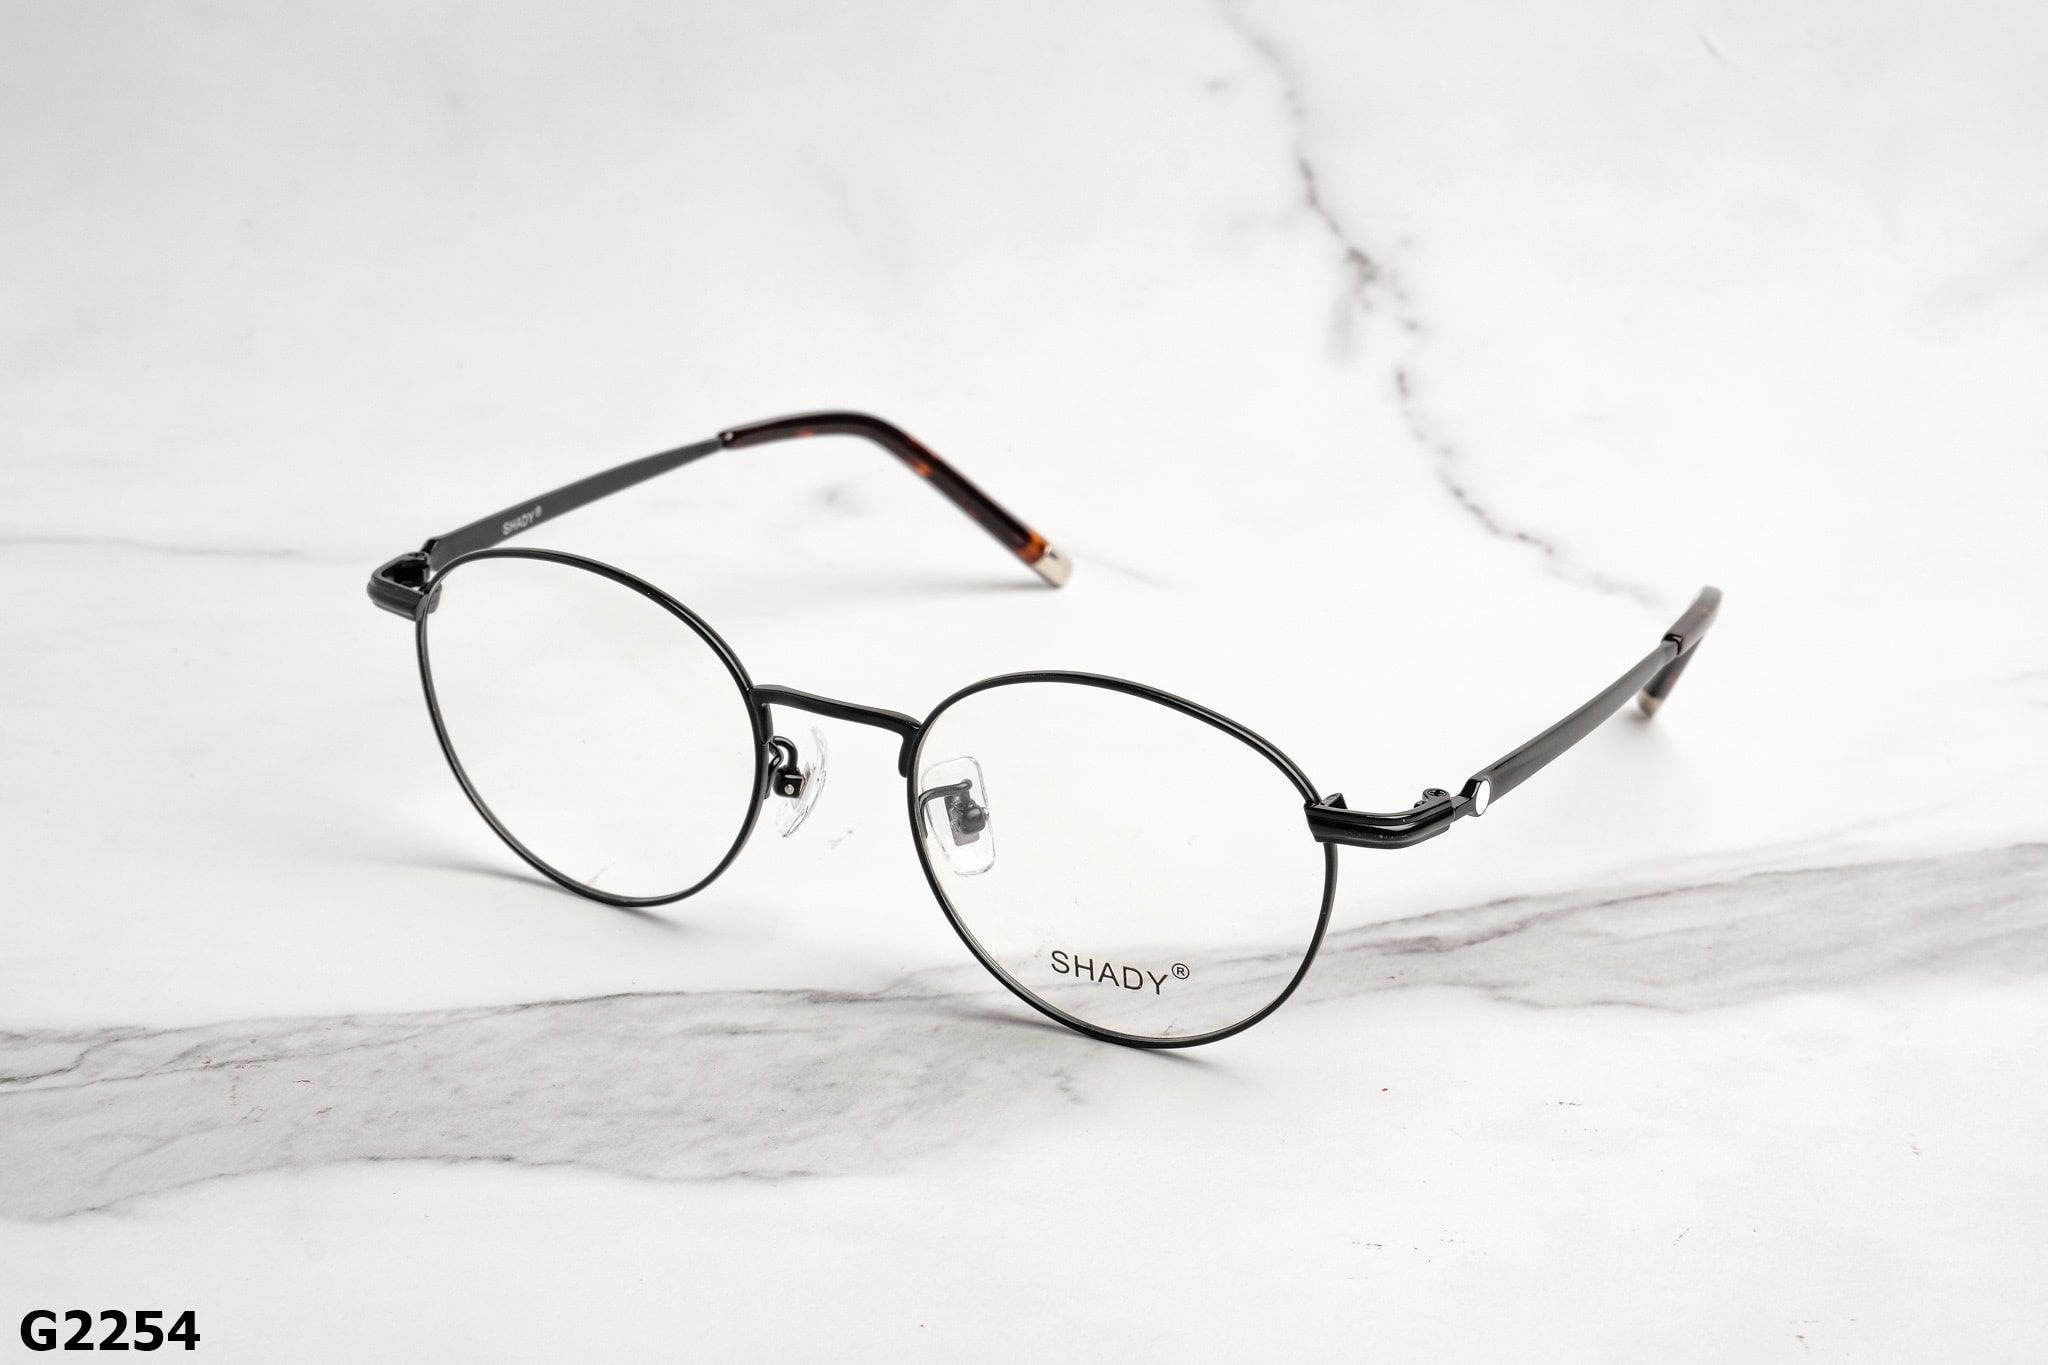  SHADY Eyewear - Glasses - G2254 